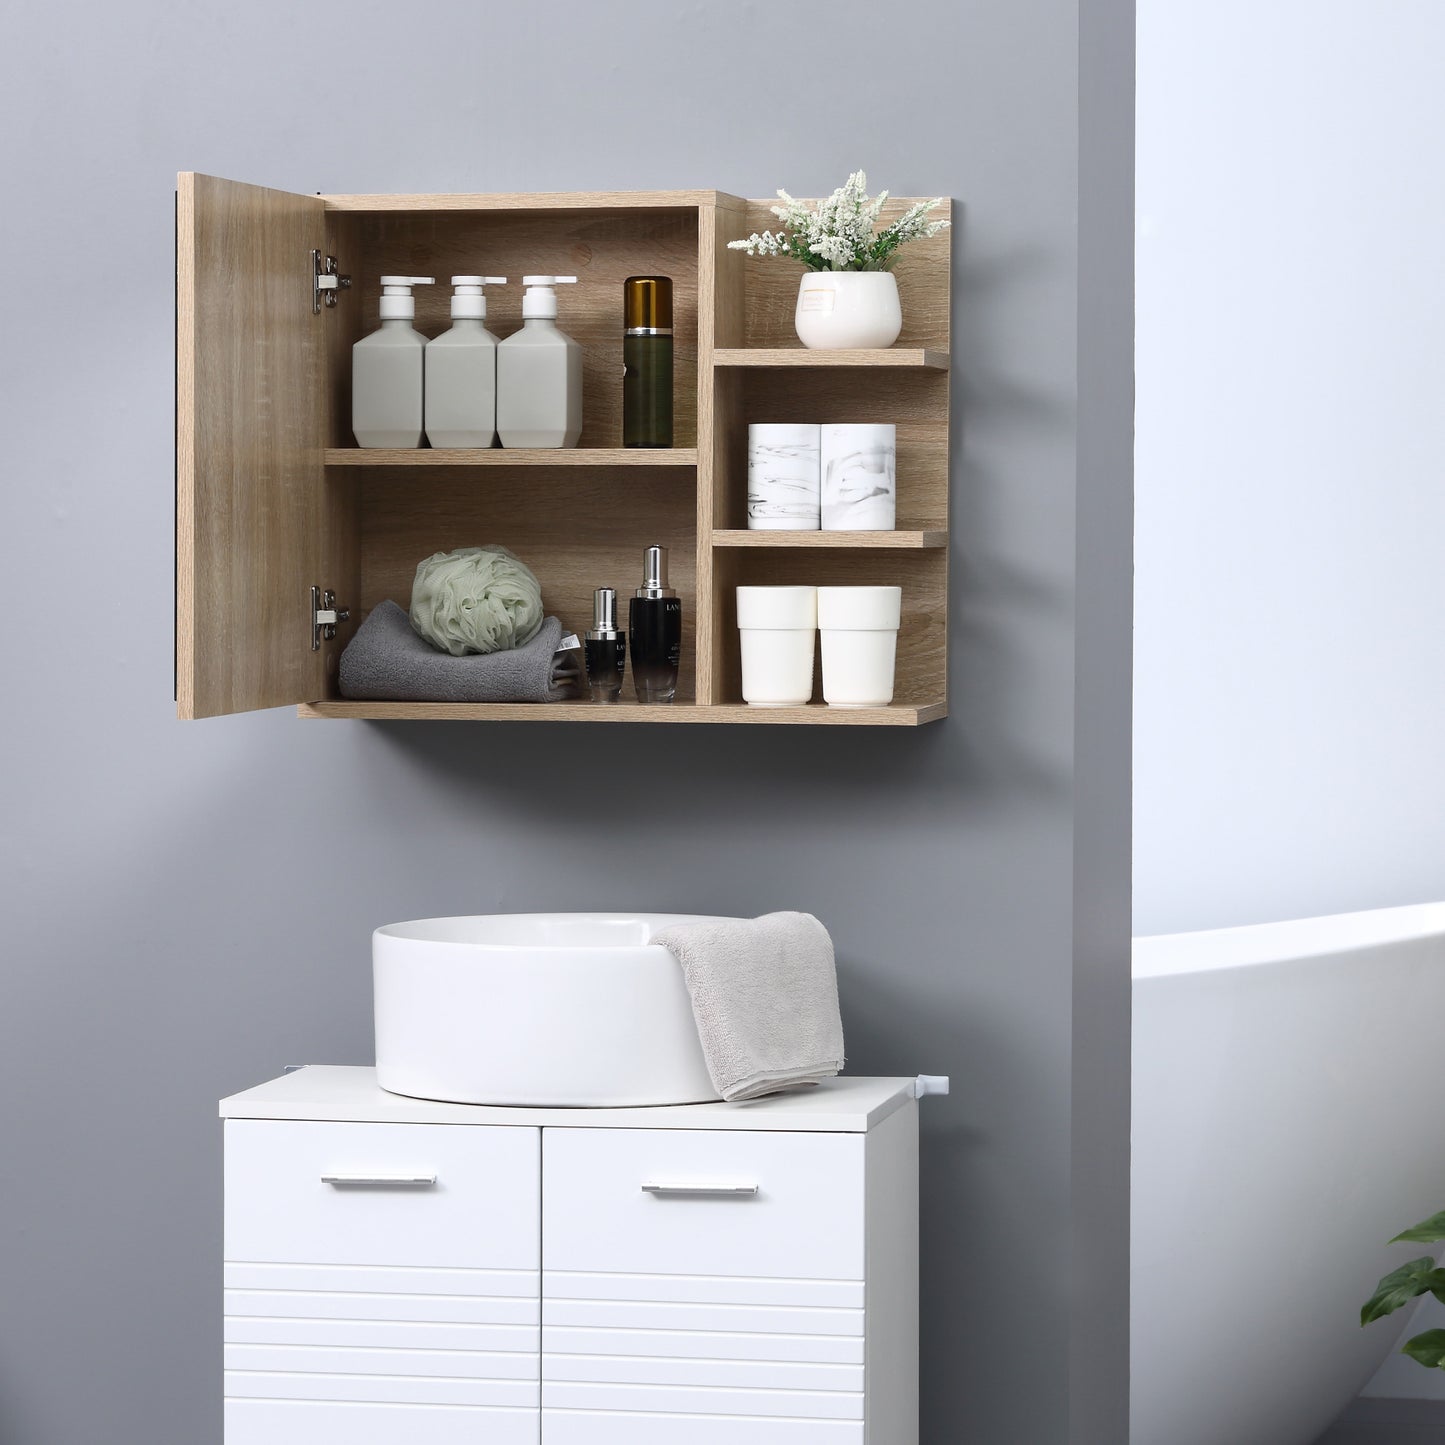 kleankin Bathroom Wall Cabinet, Medicine Cabinet with Mirror, Hanging Storage Organizer with Storage Shelves, Natural